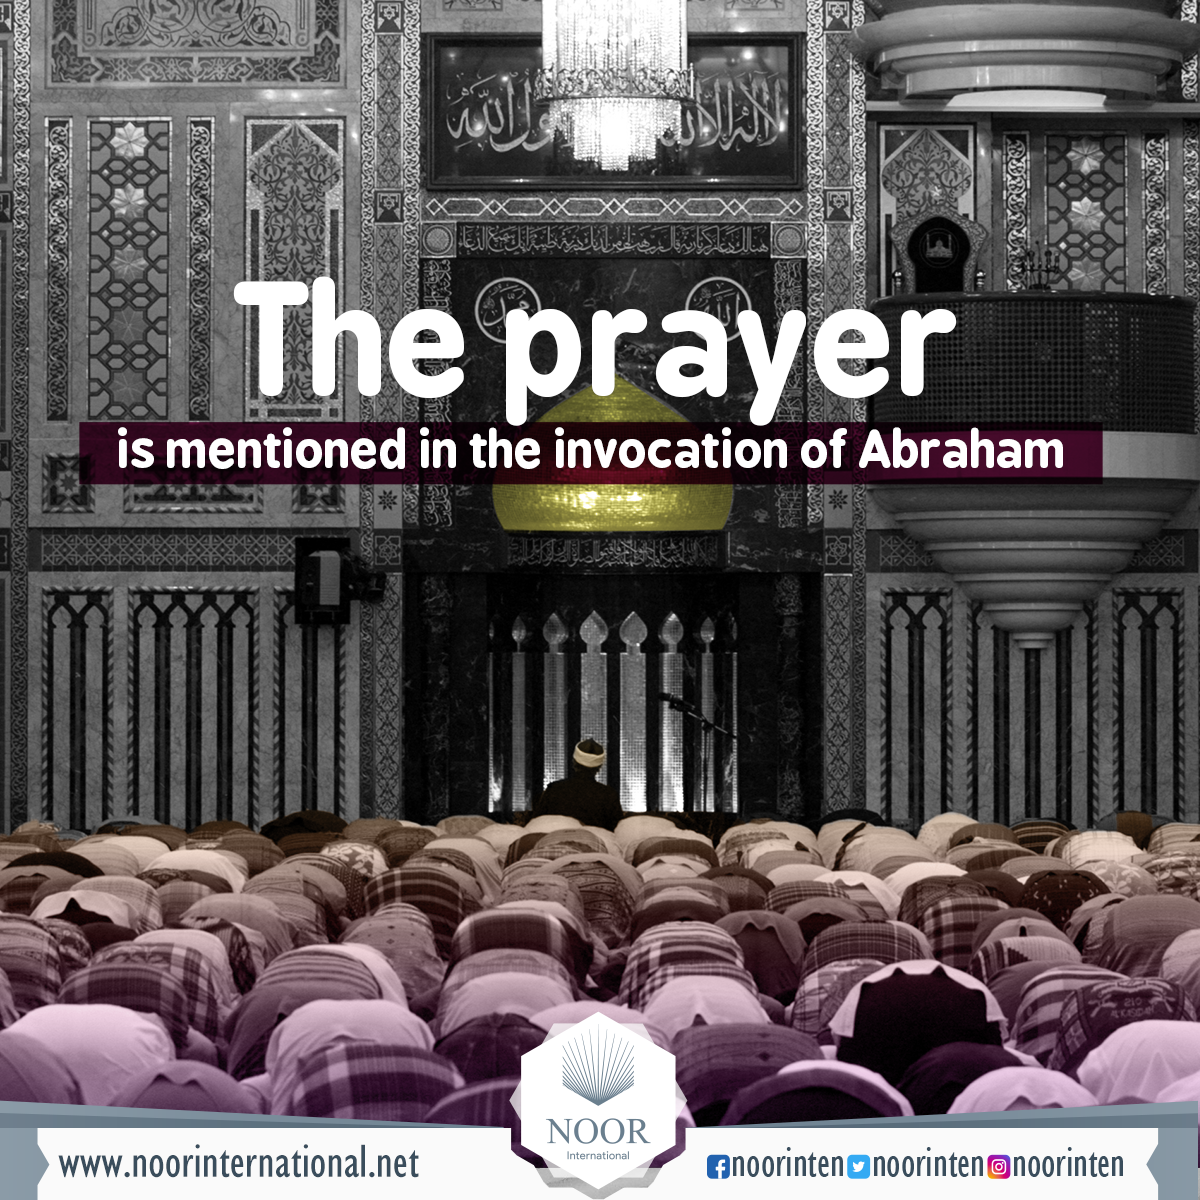 The virtue of the prayer